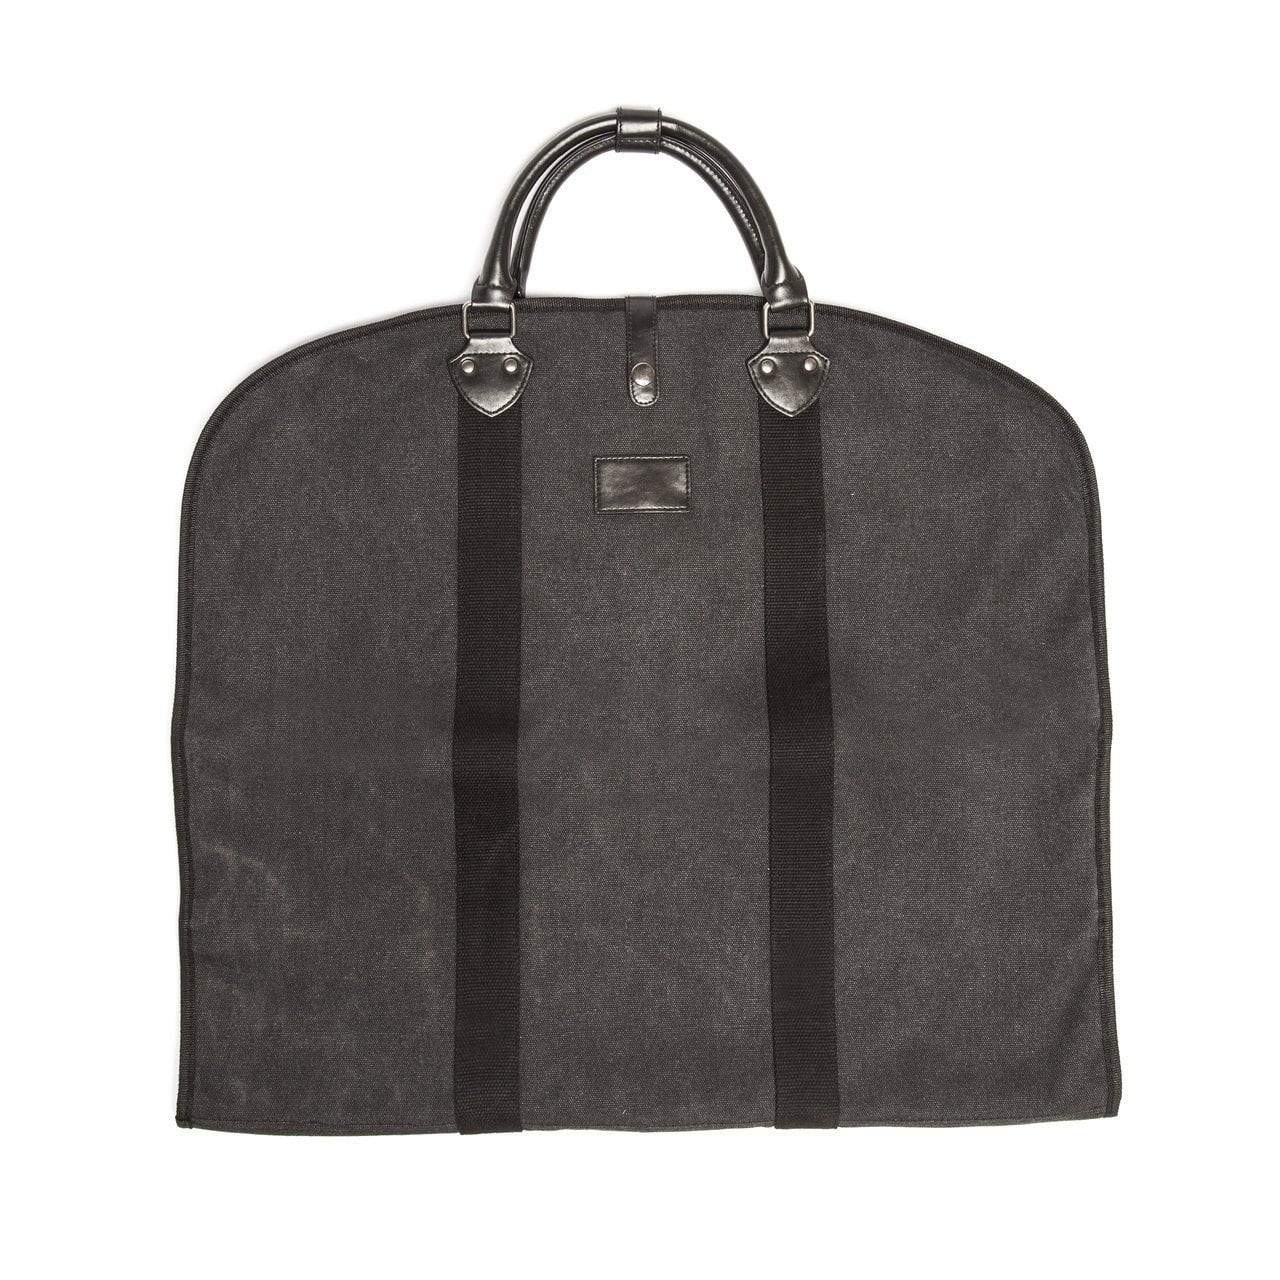 Brouk & Co Handbags Excursion Garment Bag, Grey